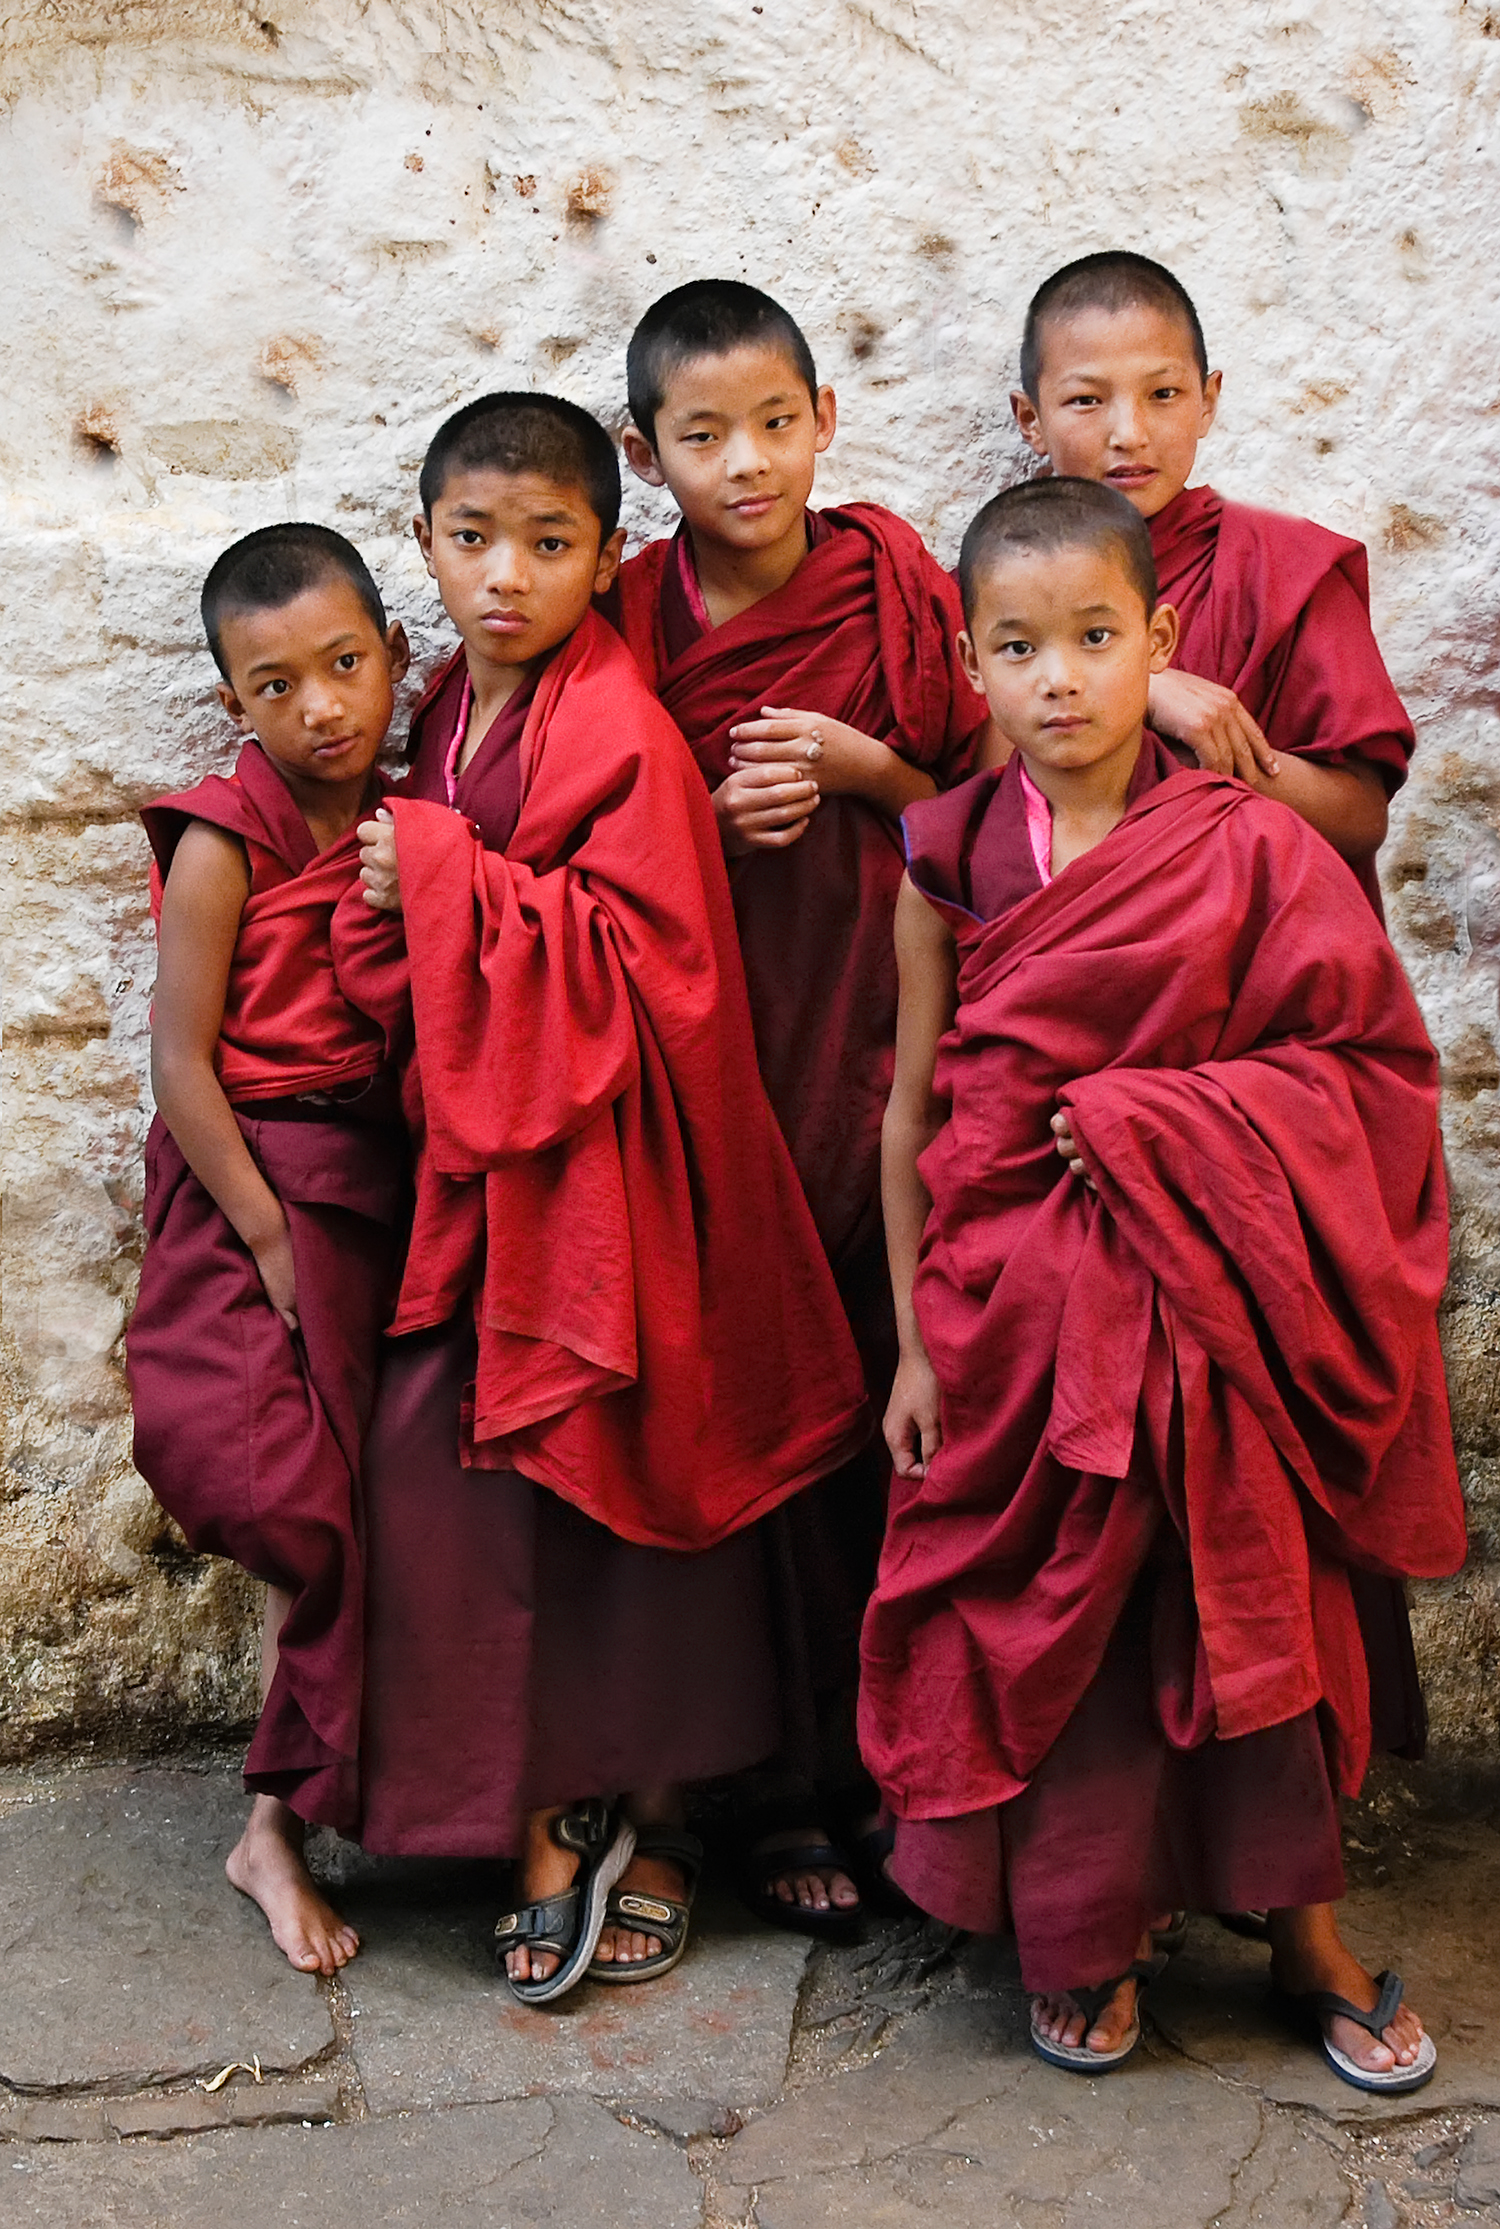  Apprentice monks, Buddhist monastery, central Bhutan 